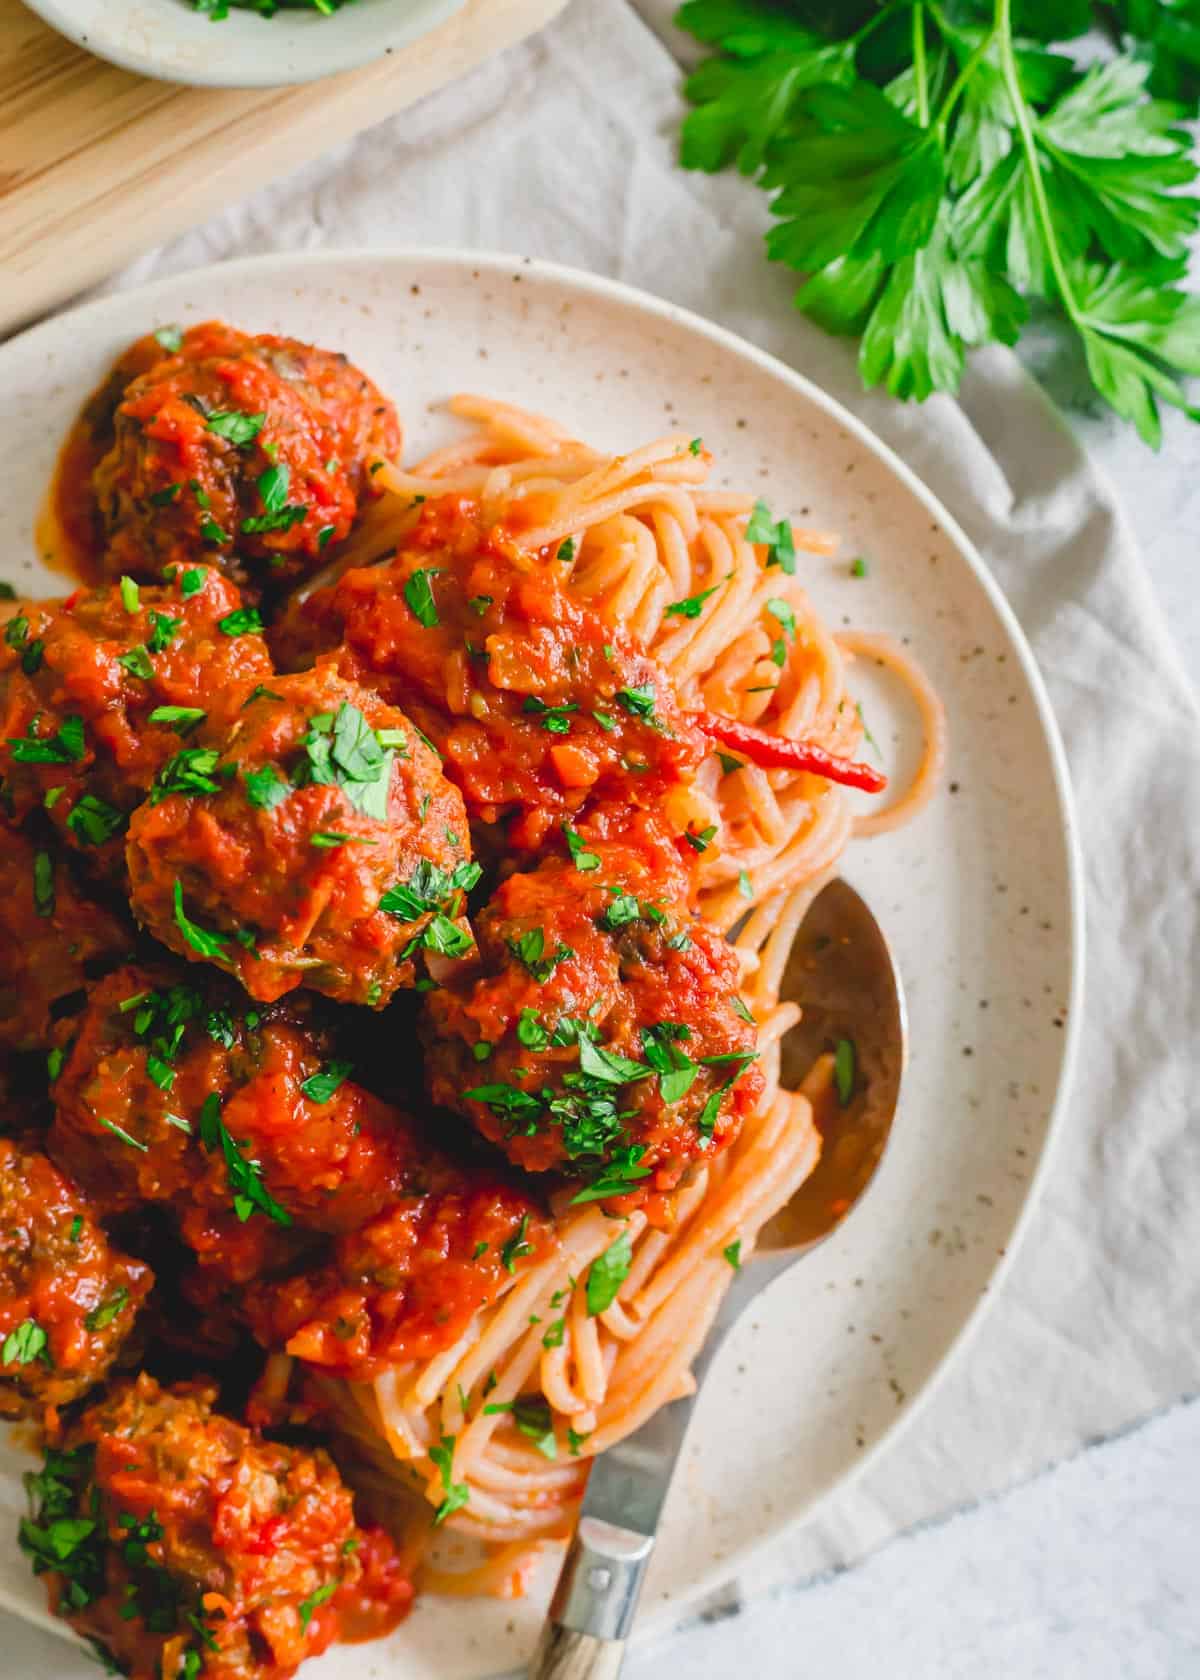 Venison meatballs with marinara sauce served with spaghetti.